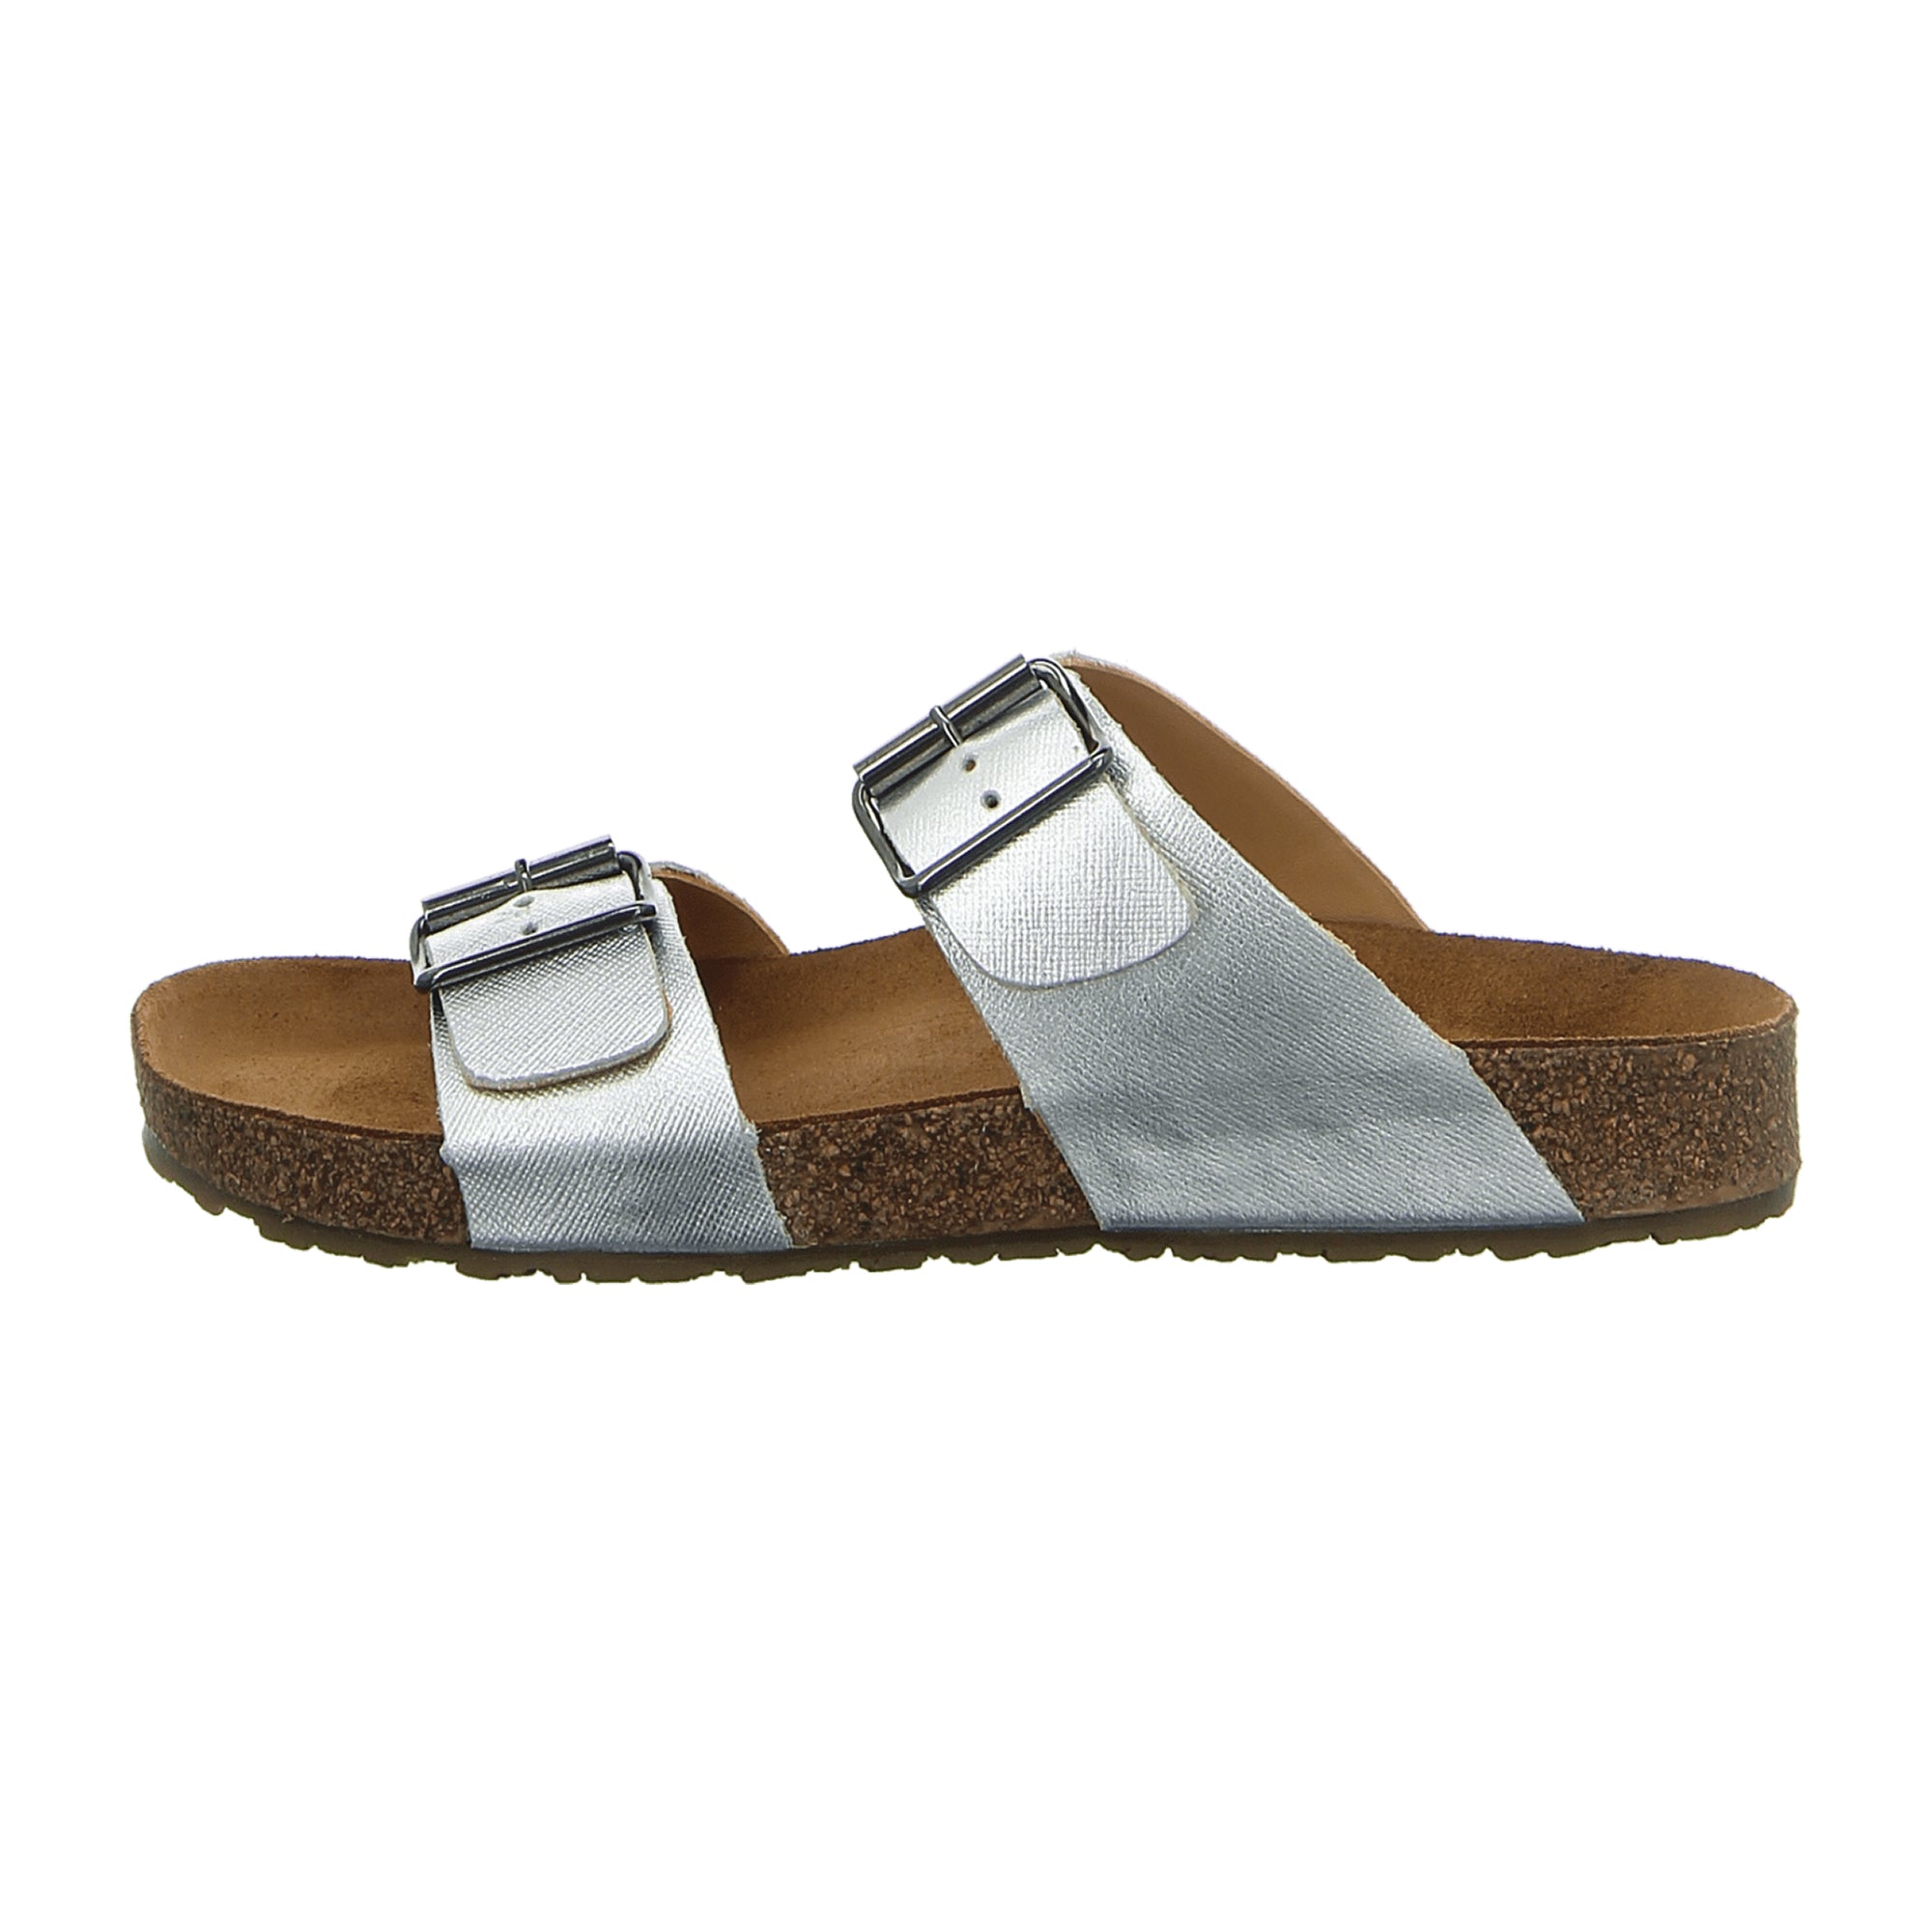 Haflinger Bio Andrea Women's Silver Sandals - Eco-Friendly, Stylish Comfort